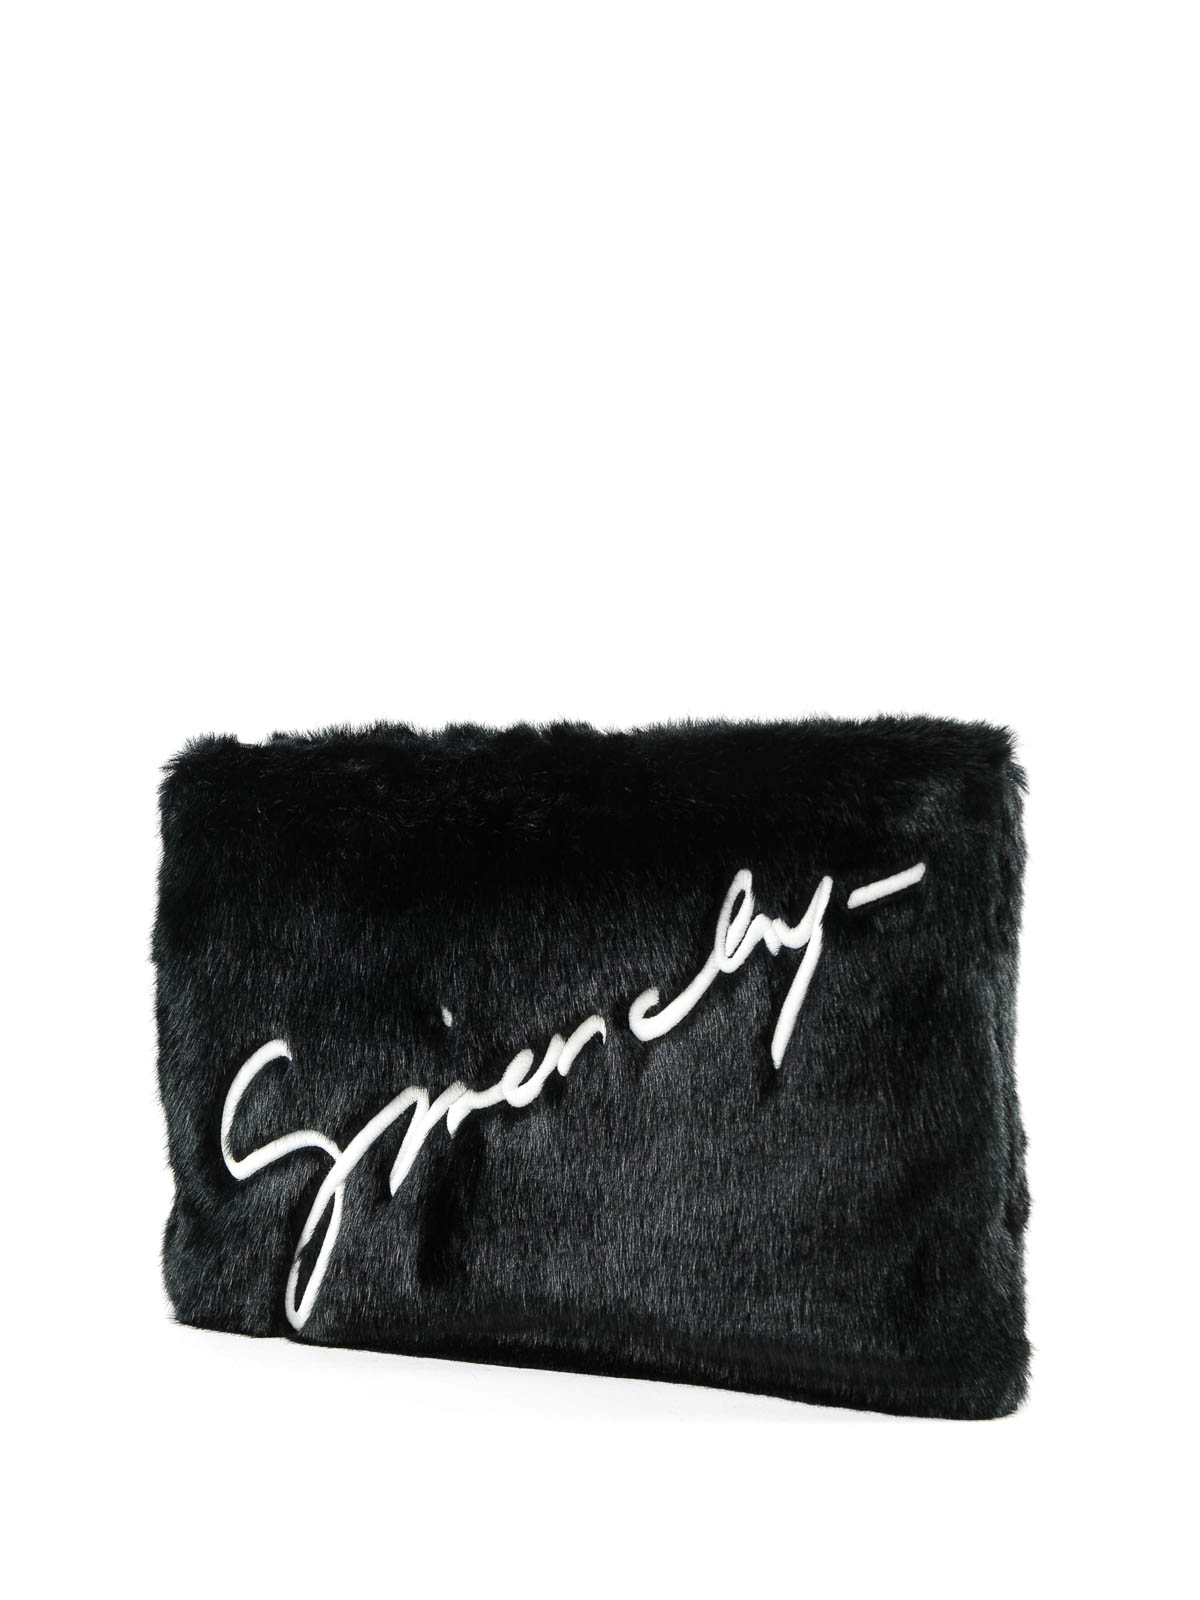 Givenchy - Black faux fur clutch 